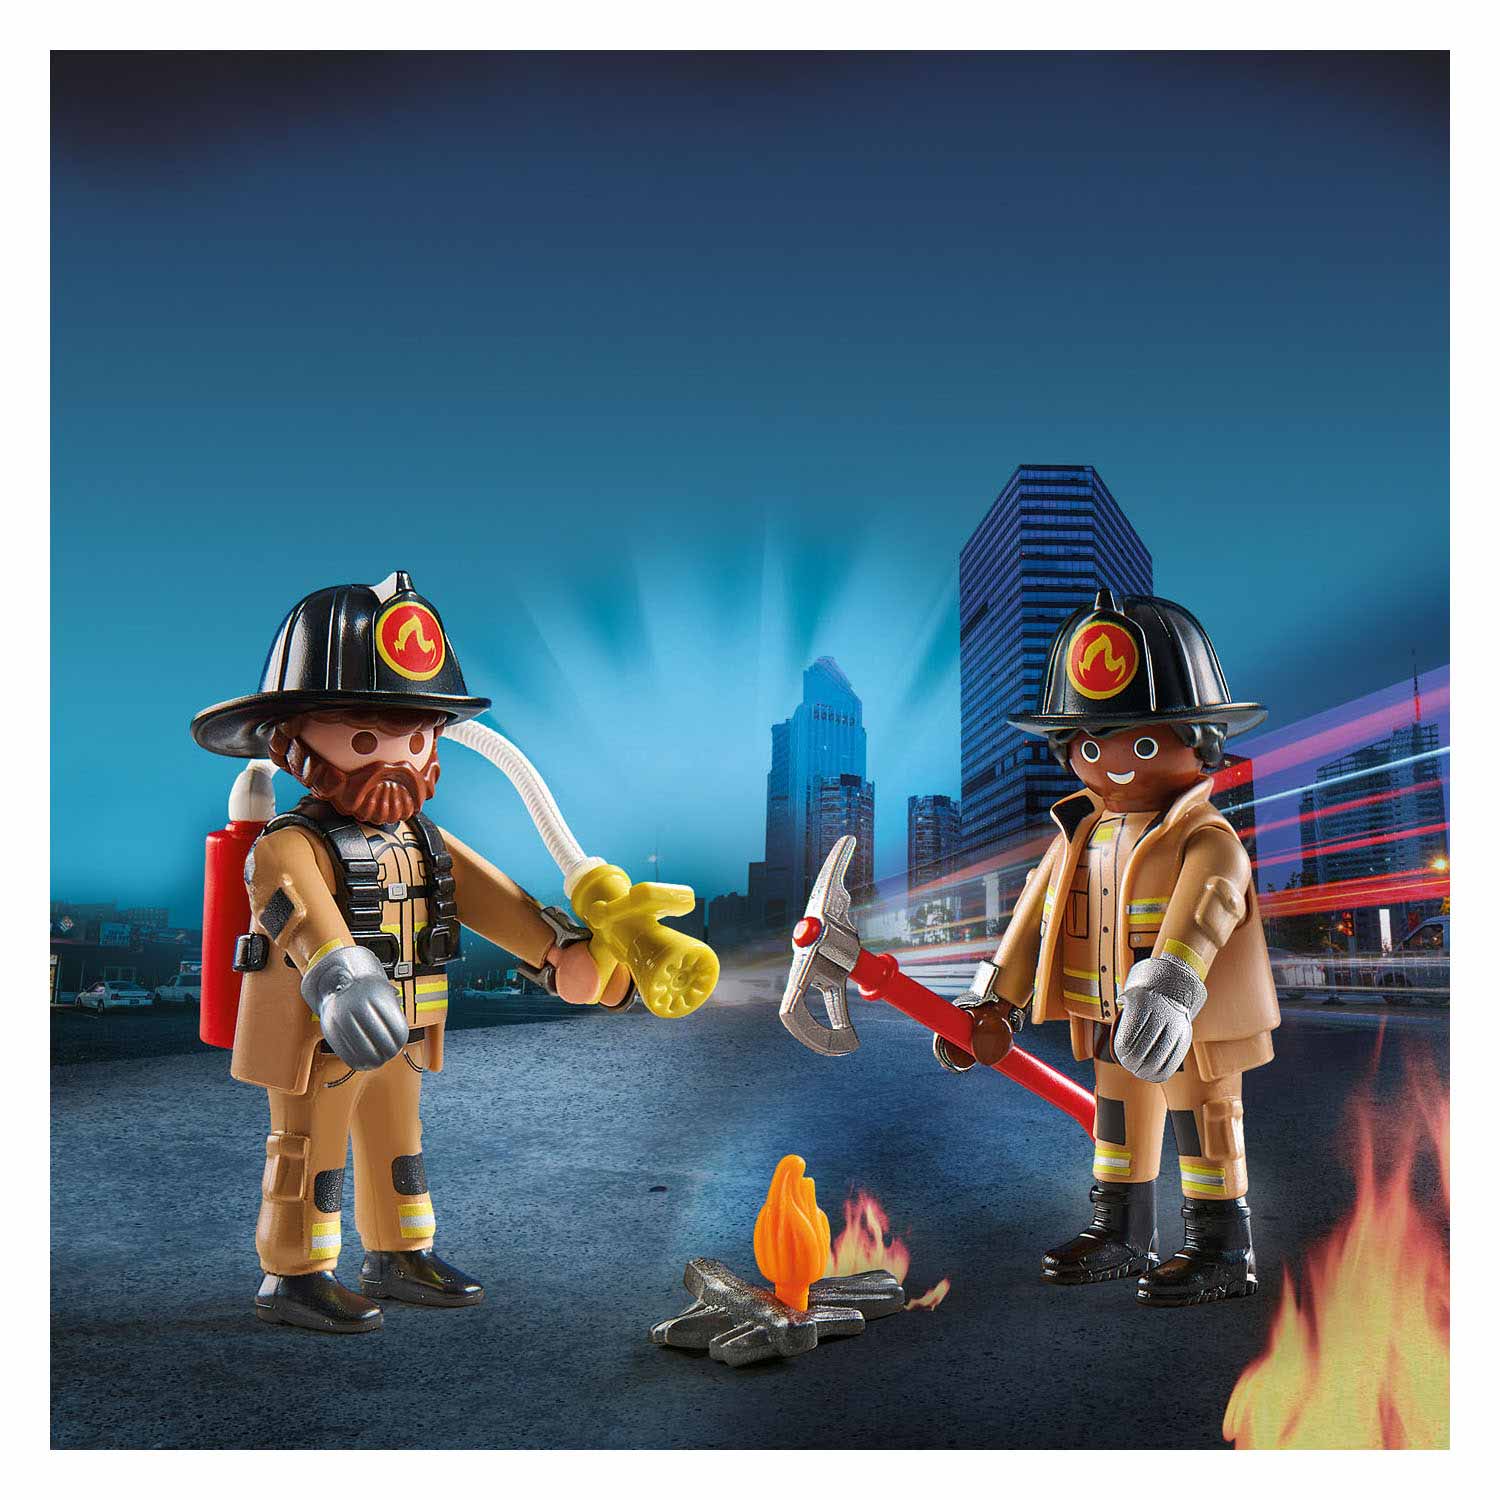 Playmobil City Action Fire Rescue Carry Case Building Set